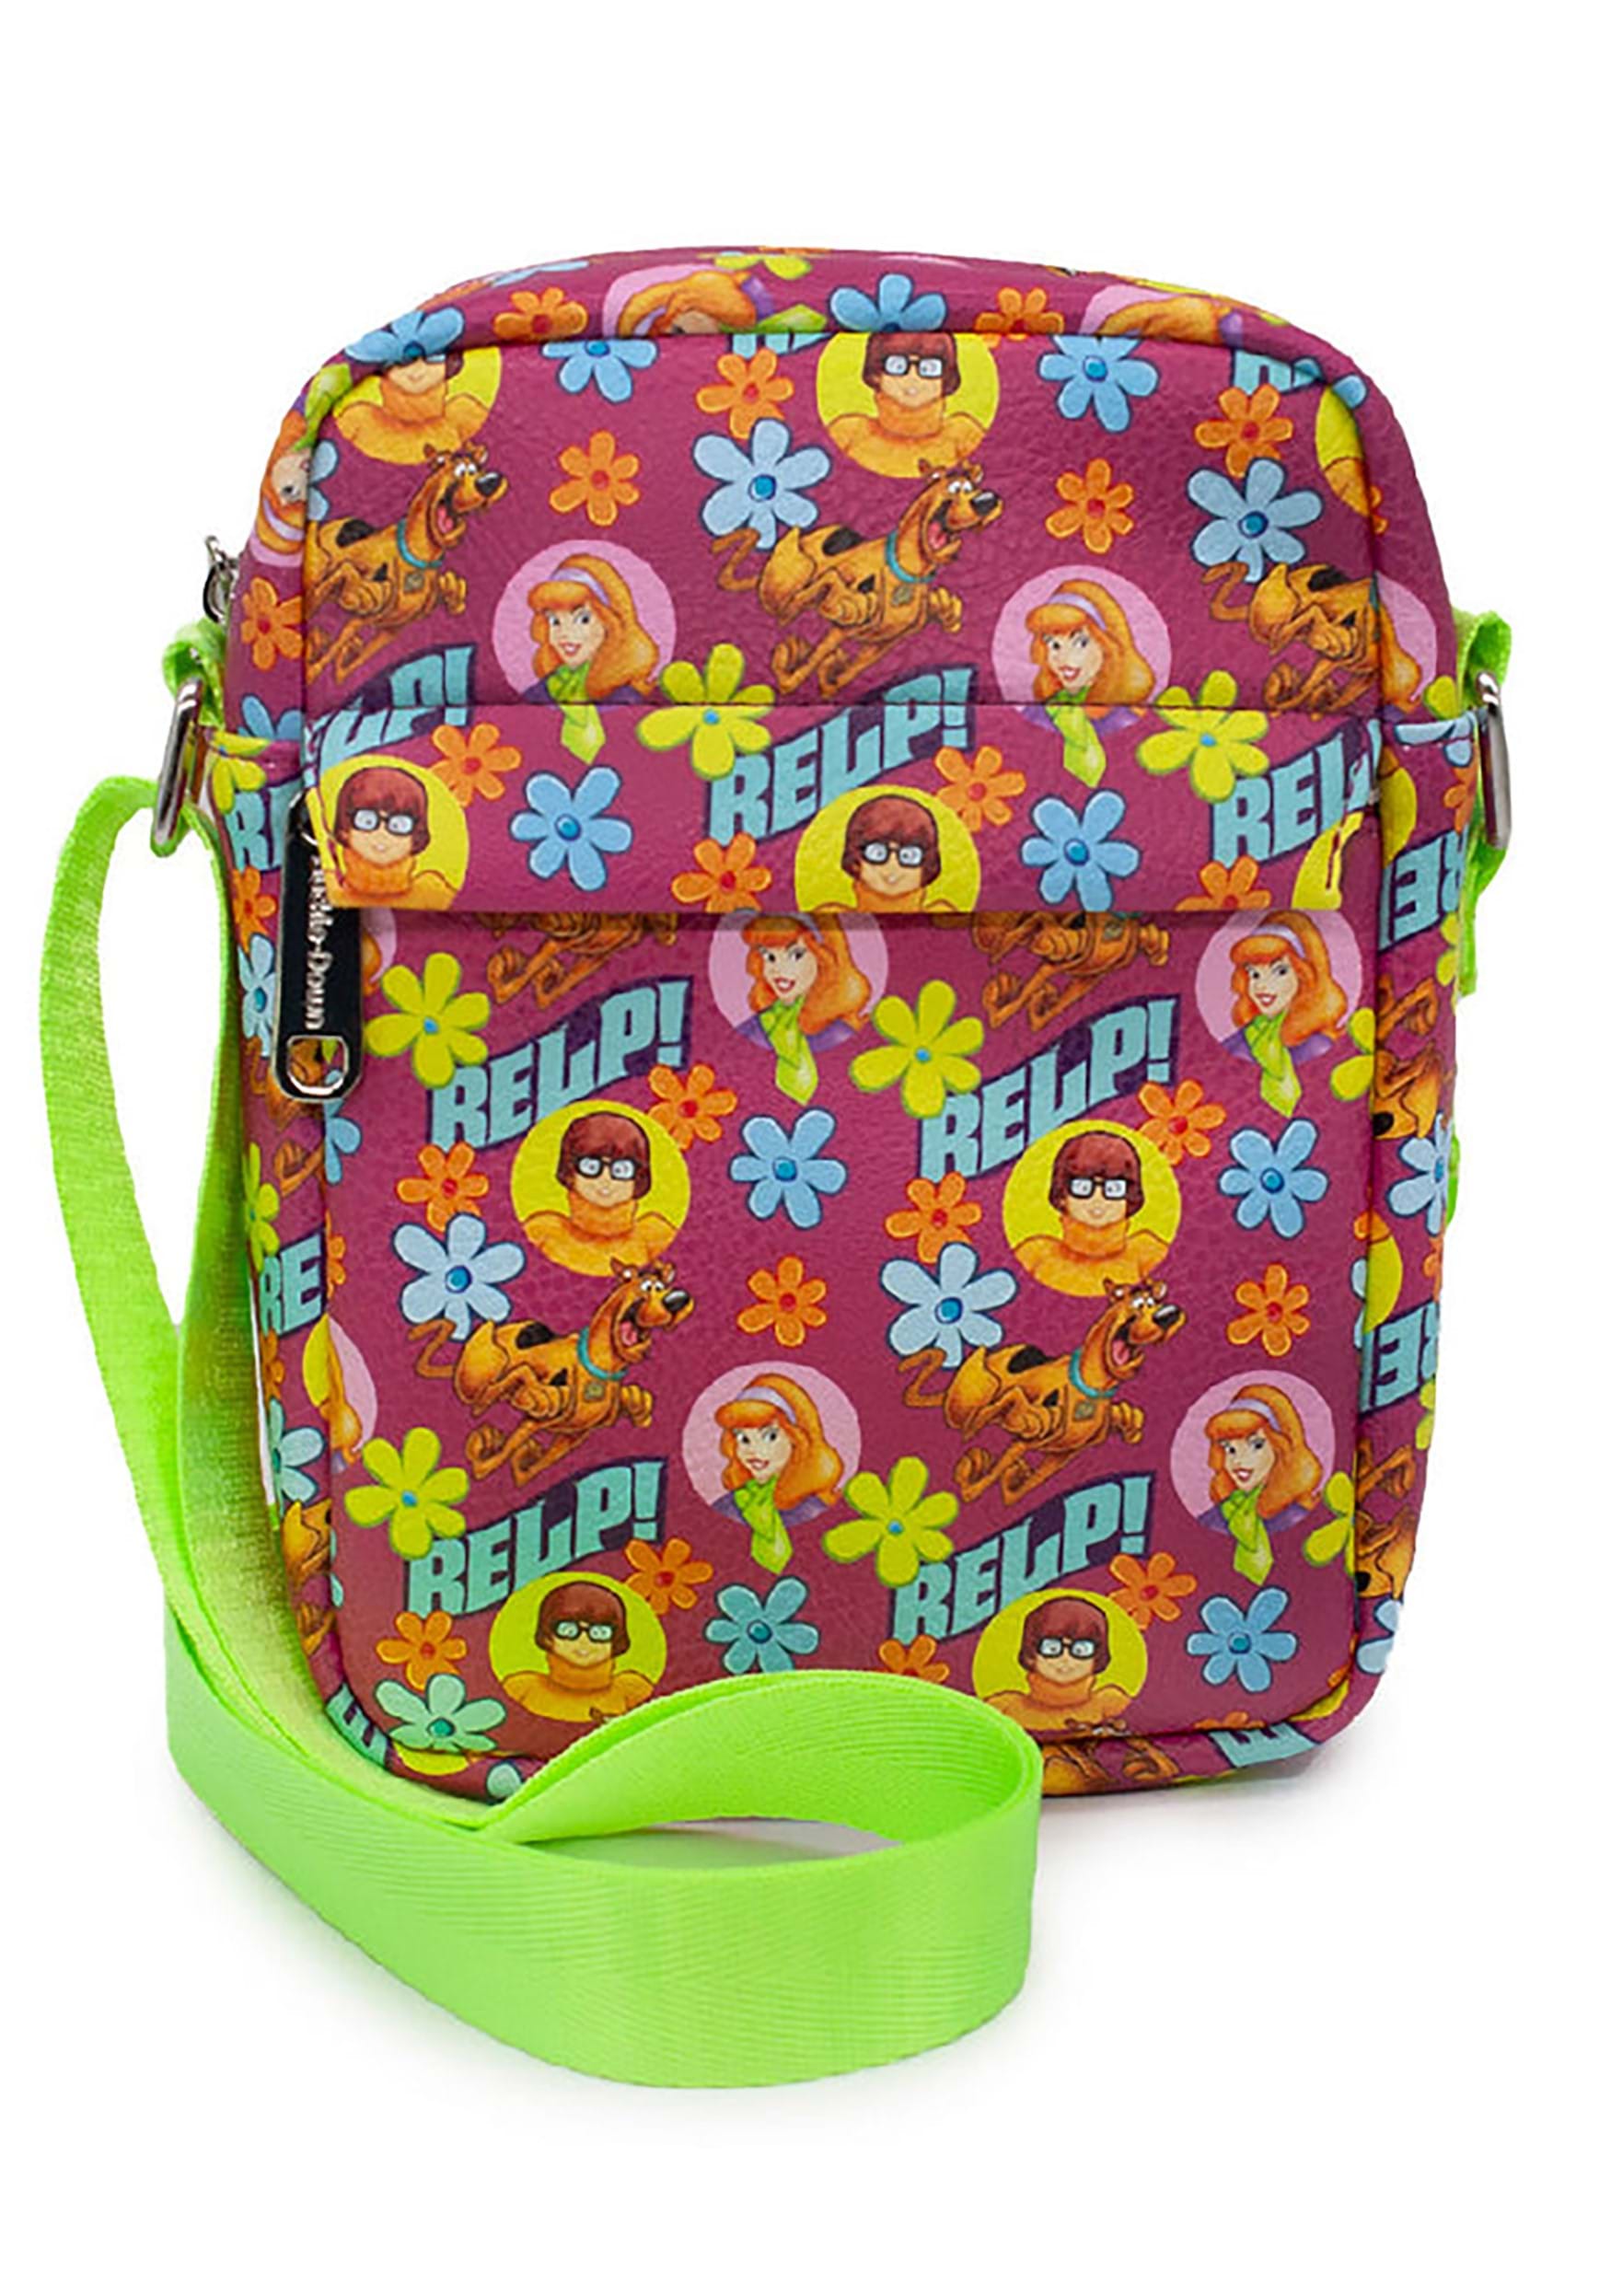 Scooby Doo Relp! Flowers Women's Crossbody Wallet